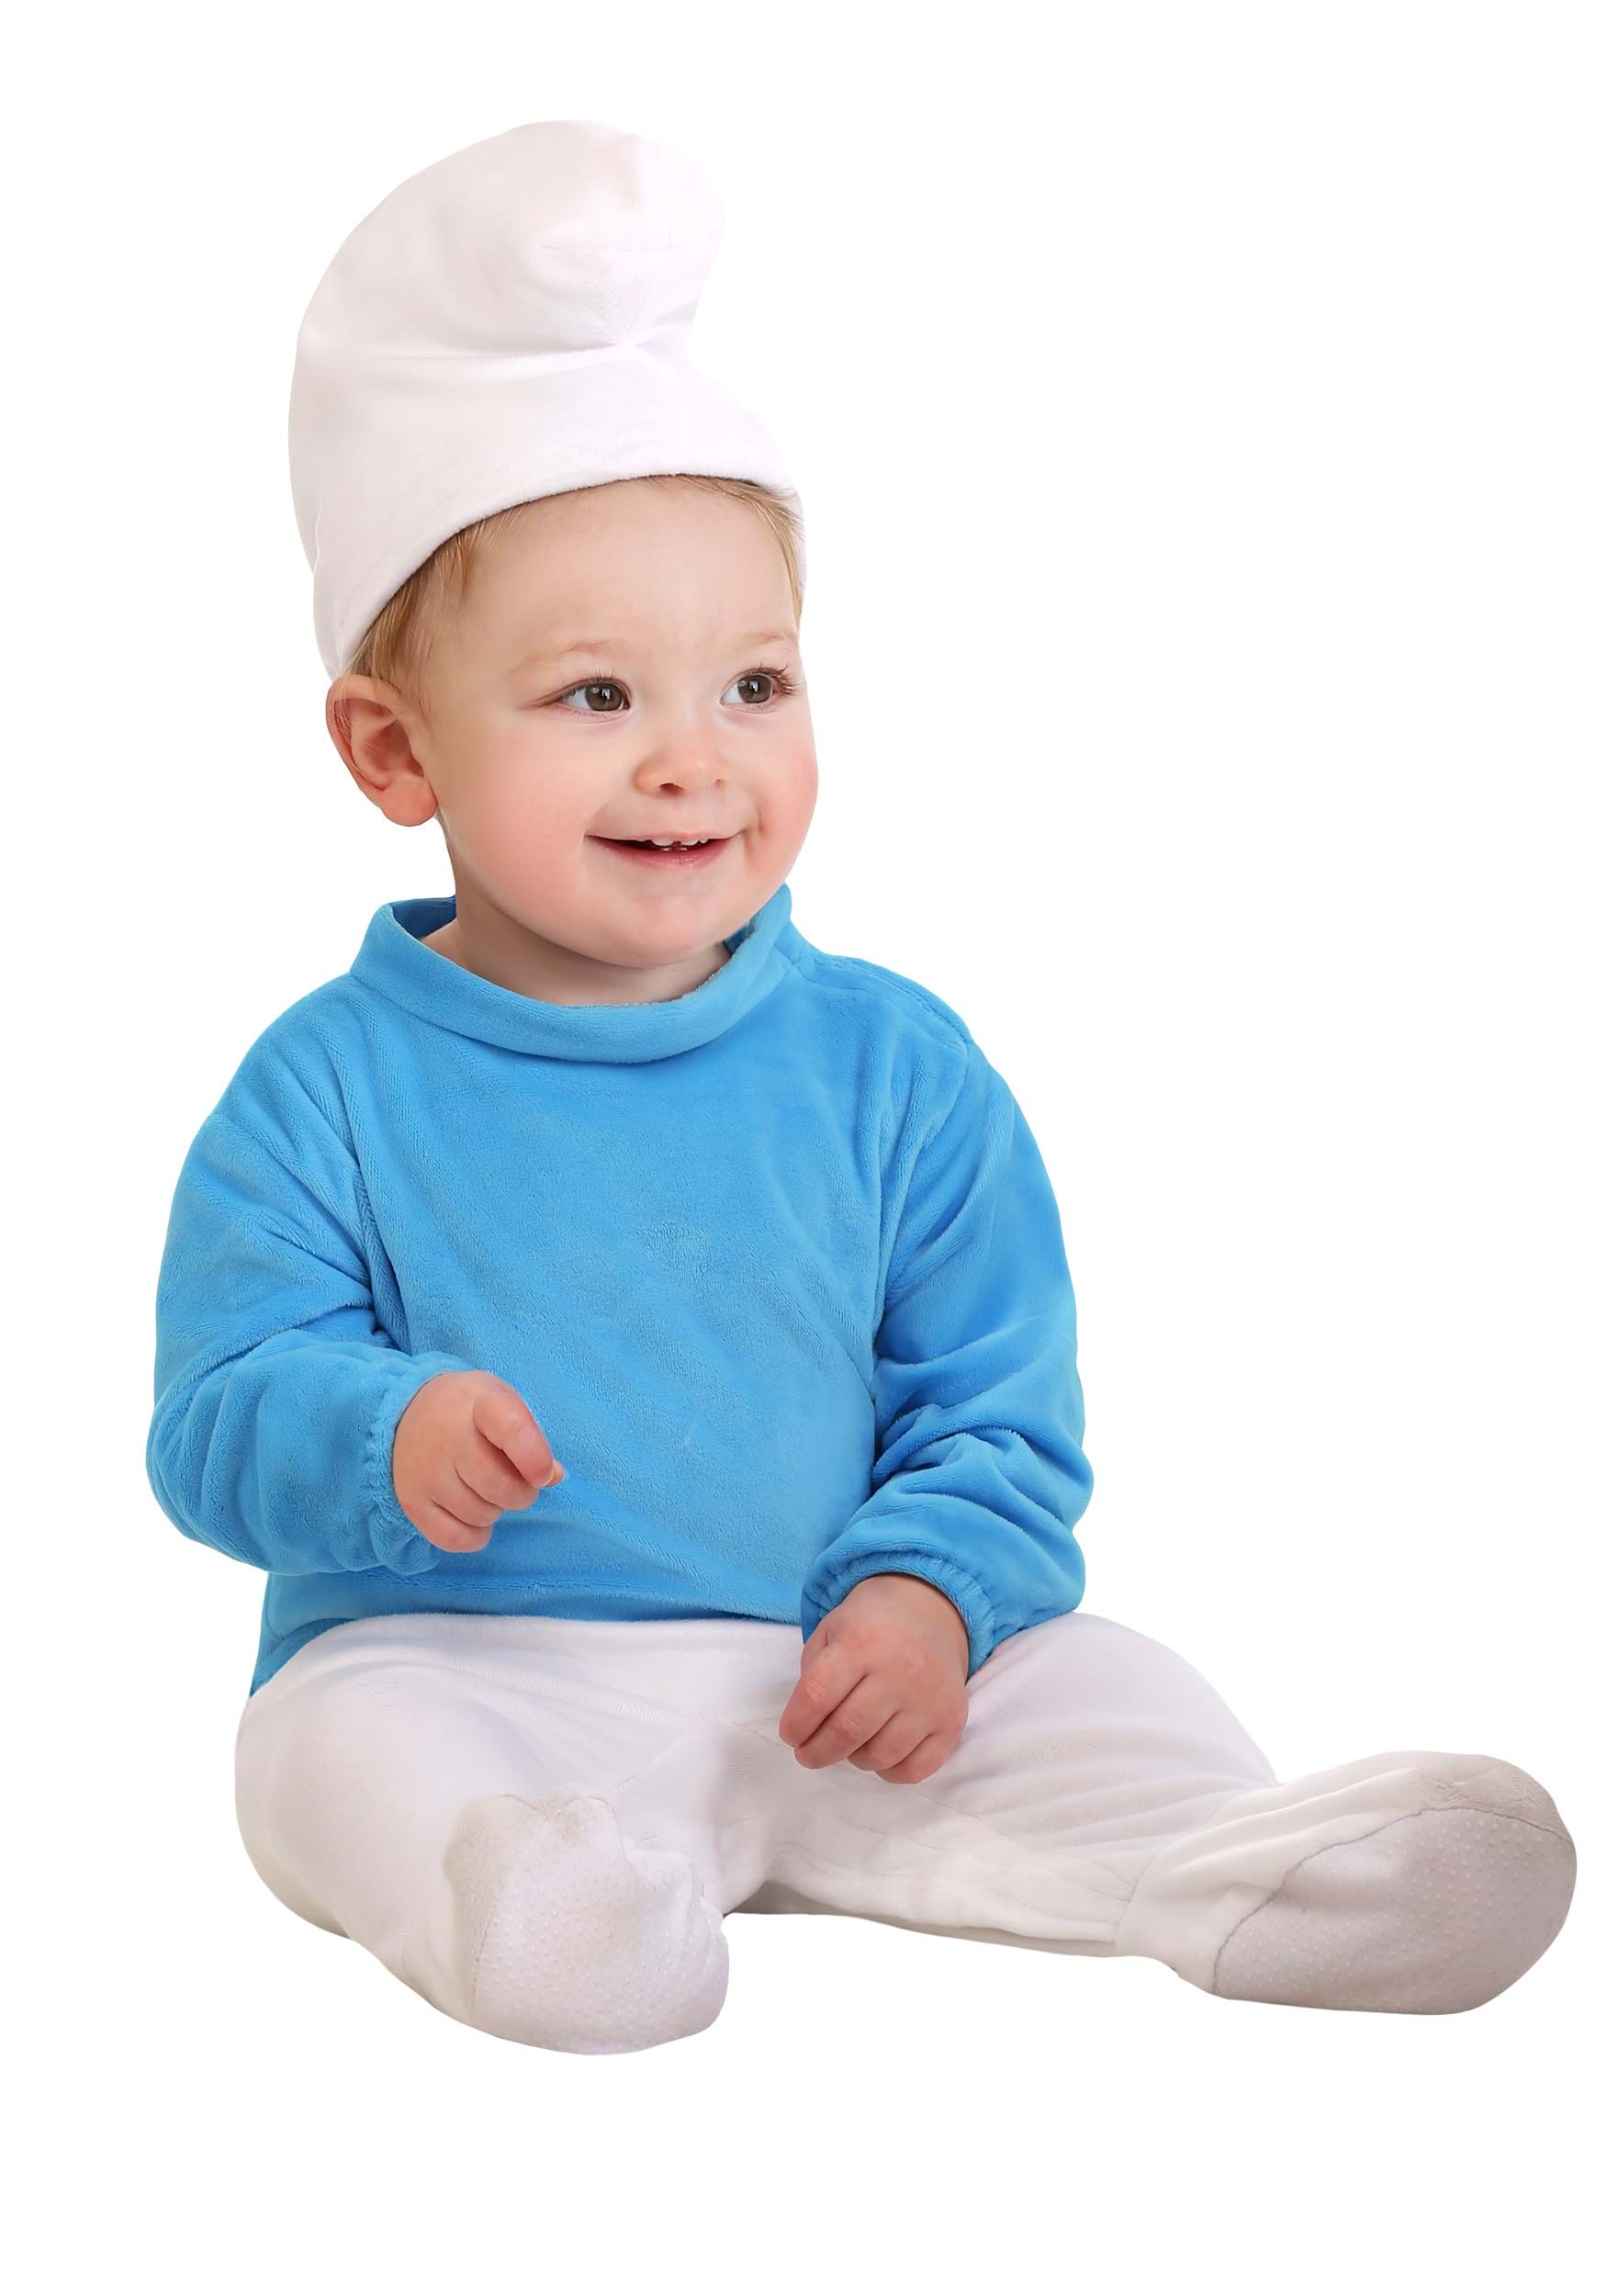 Infant The Smurfs Smurf Costume